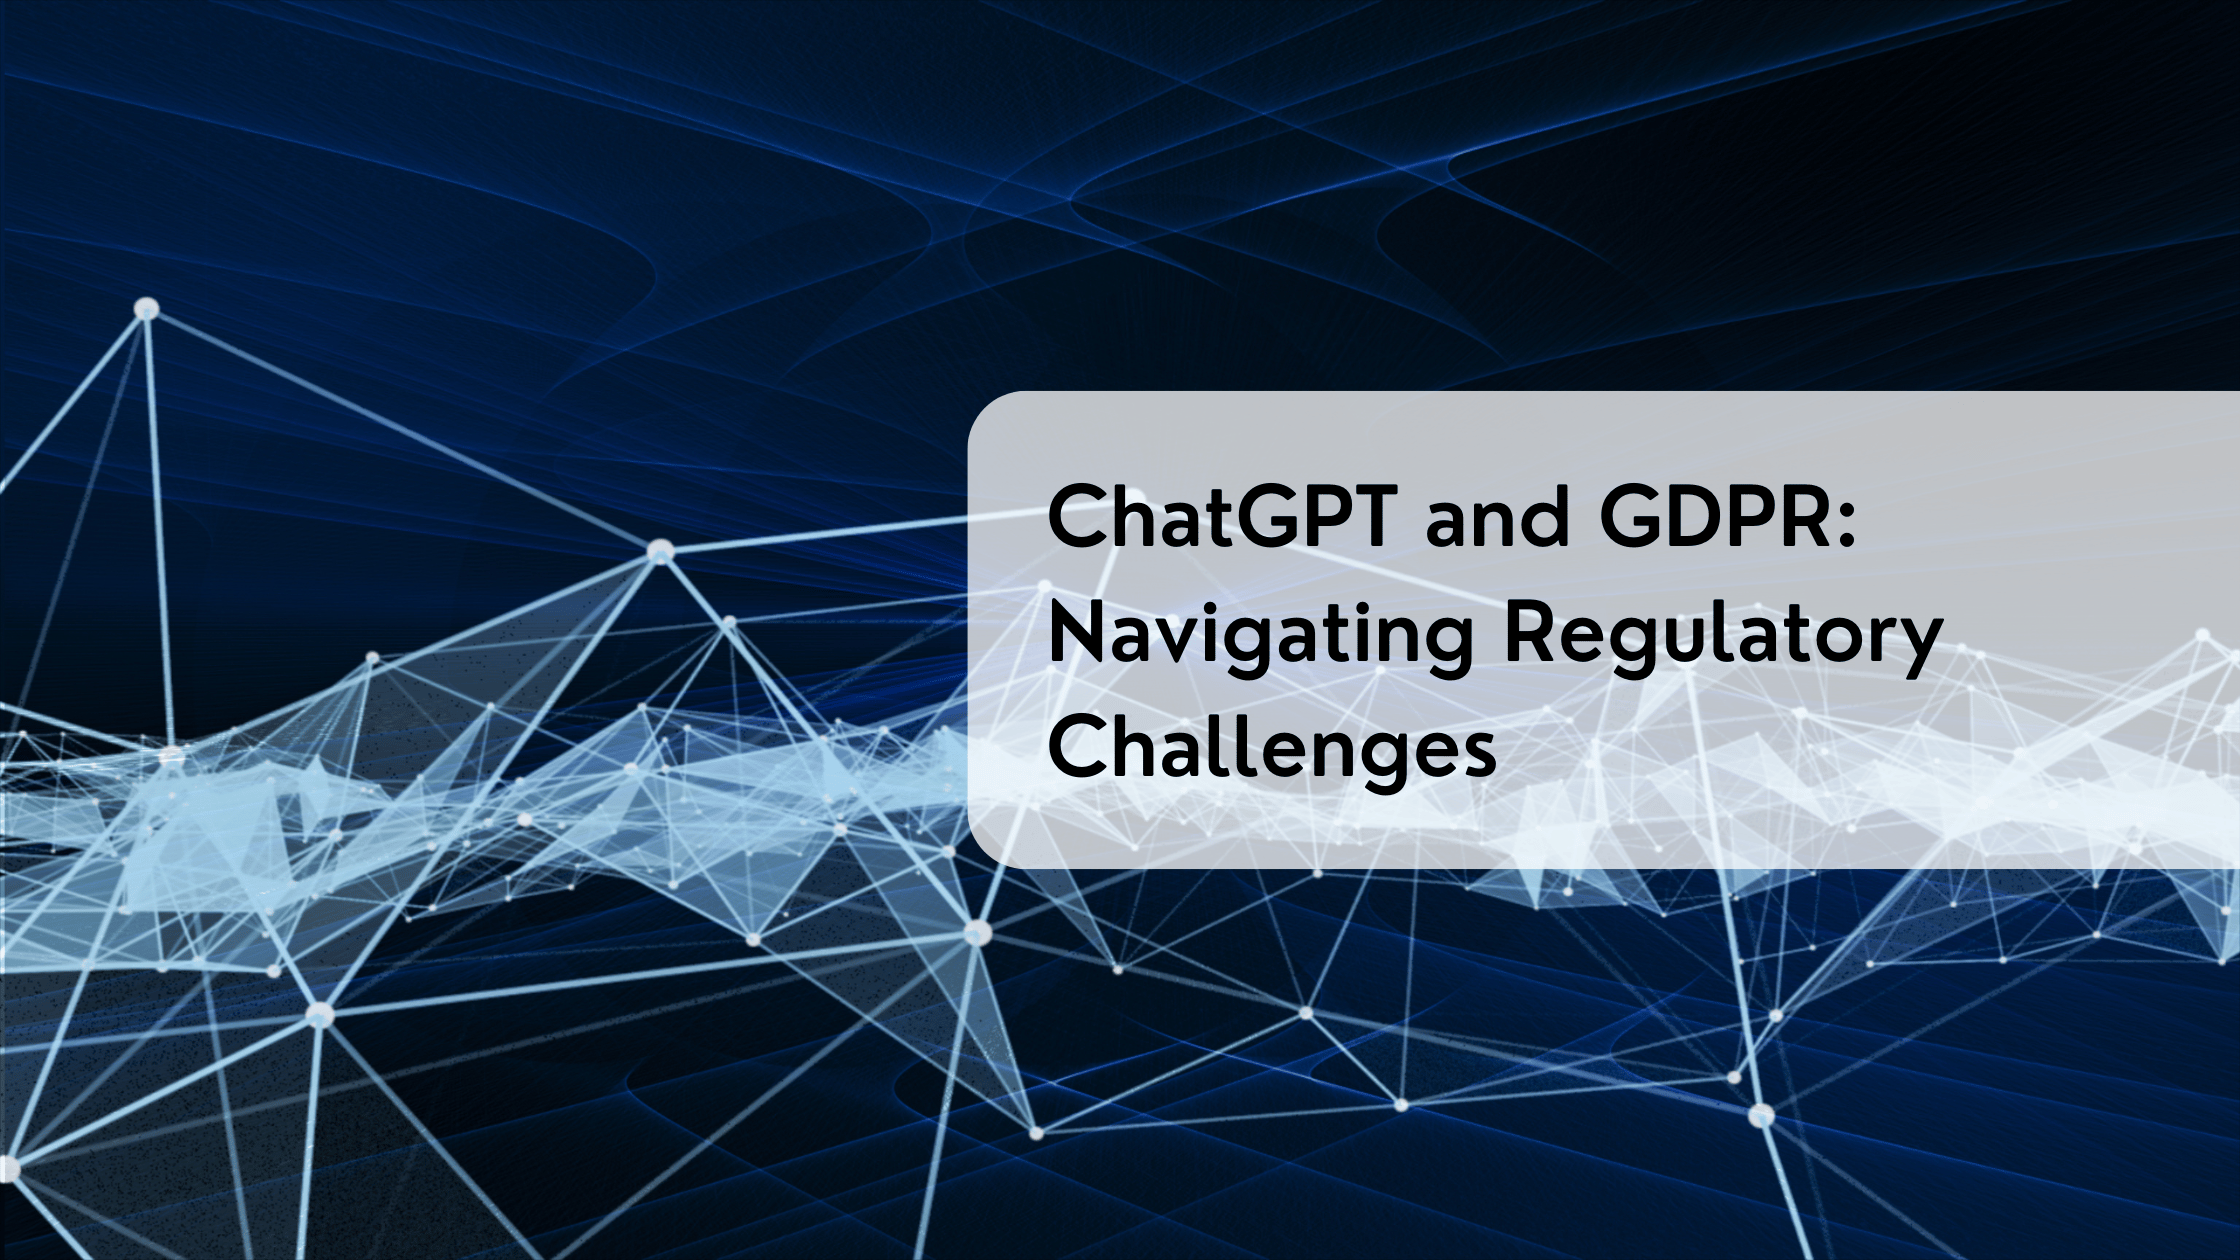 ChatGPT and GDPR: Navigating Regulatory Challenges